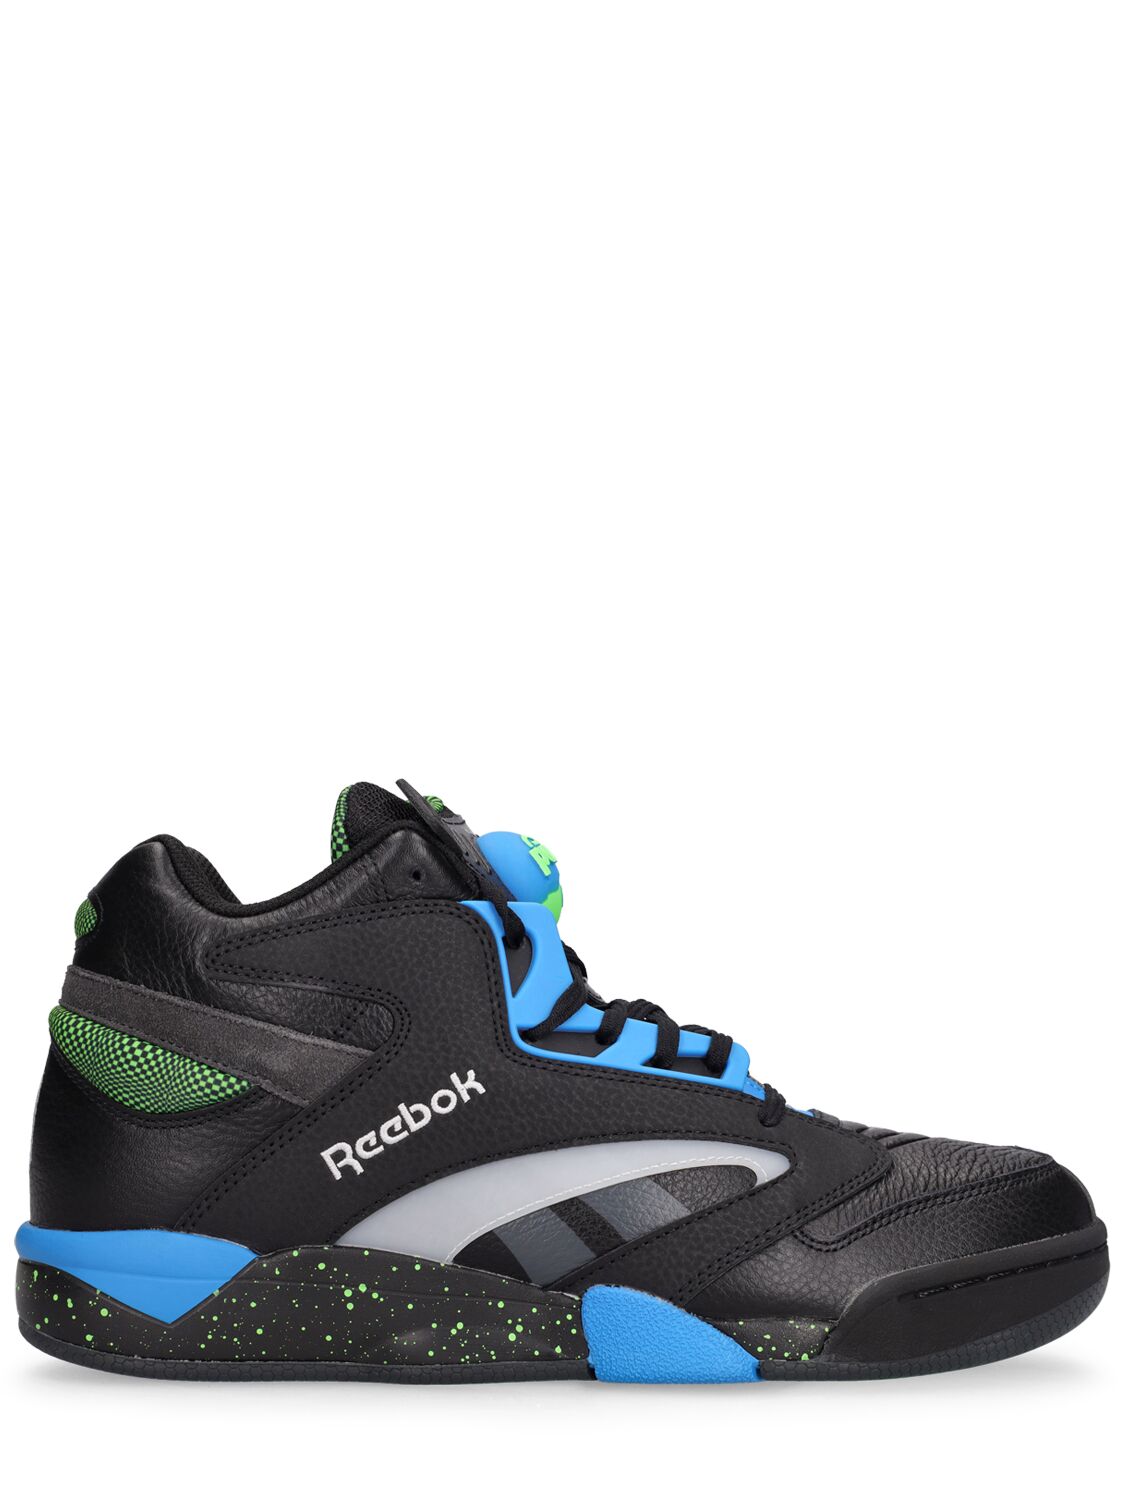 Men's shoes Reebok Shaq Victory Pump Core Black/ Energy Blue/ Solid Lime